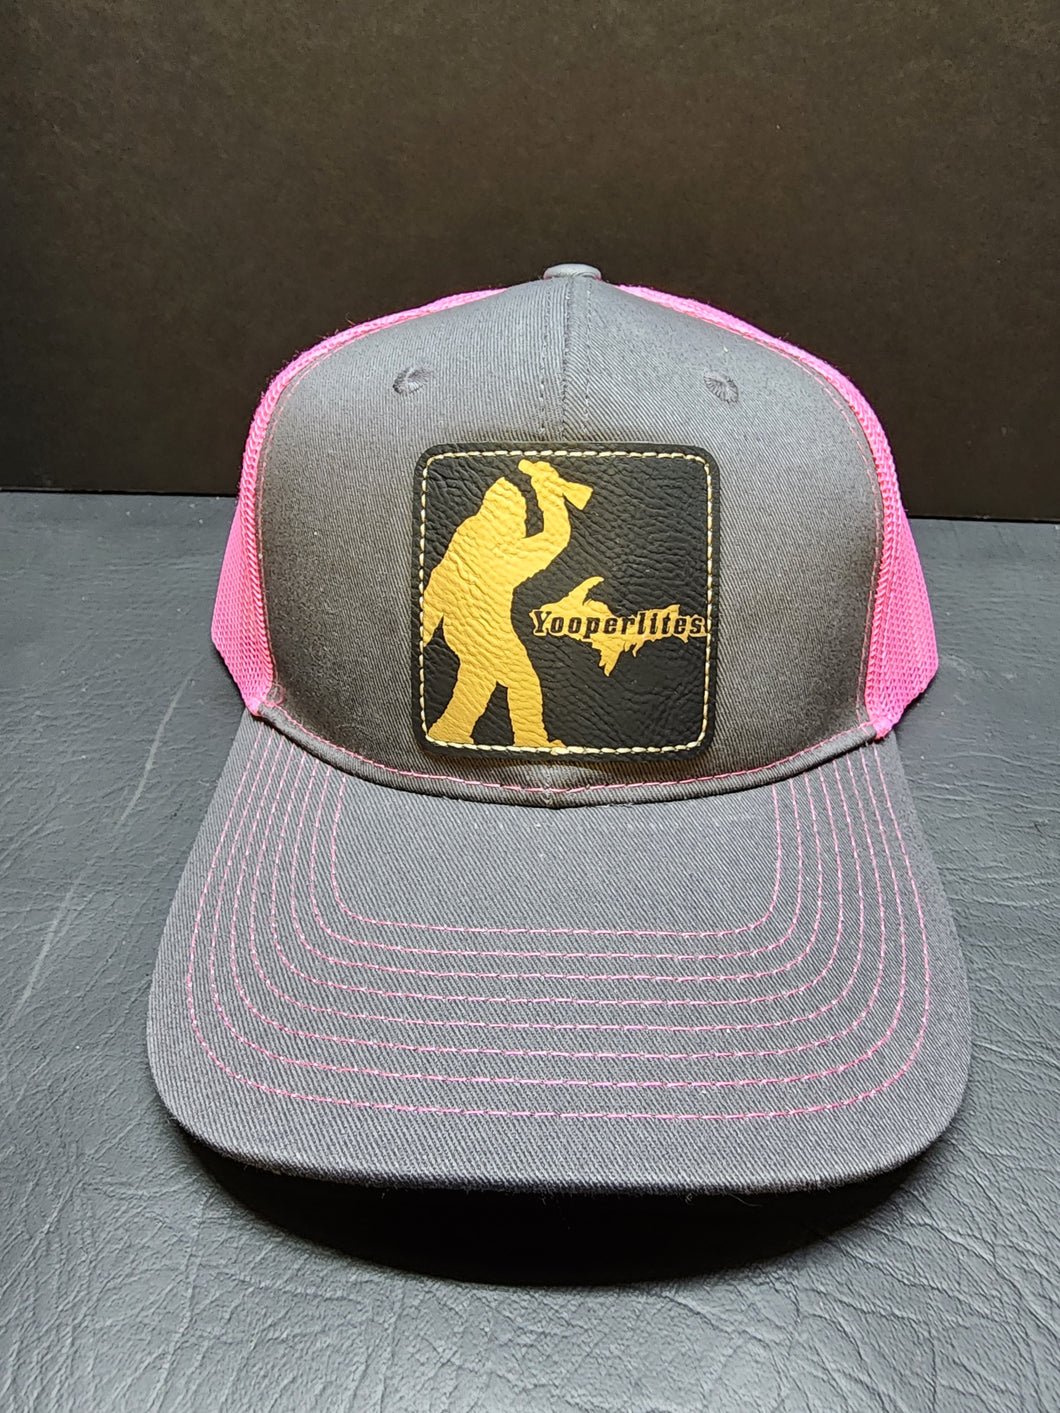 Yooperlites Pink Sasquatch Hat